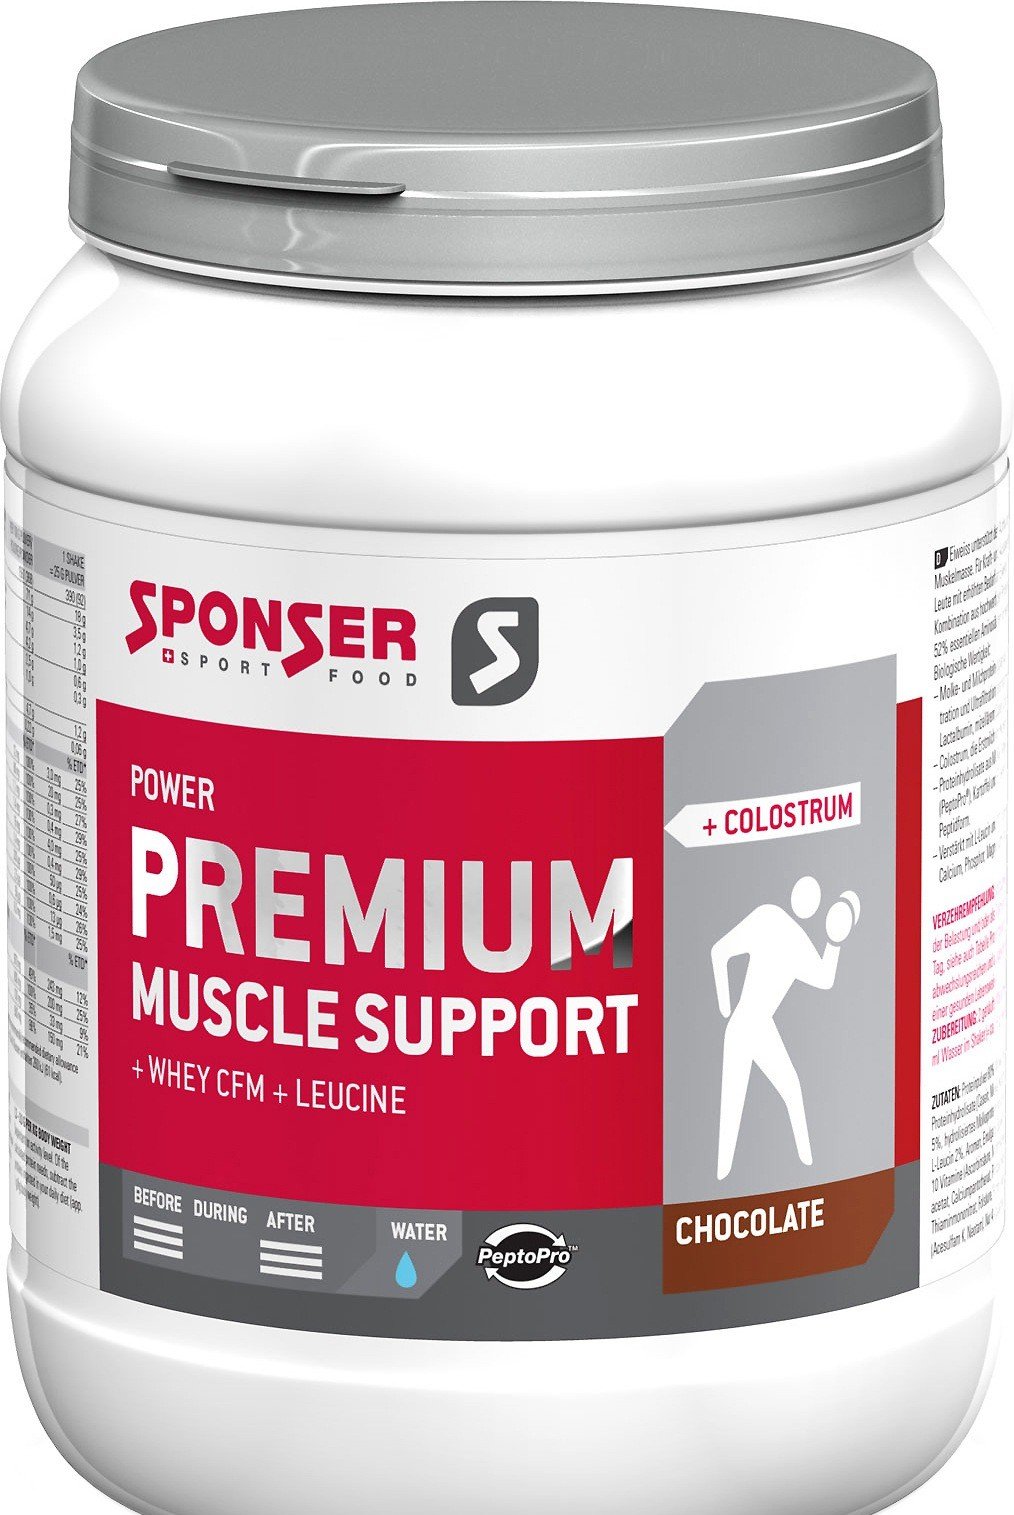 Premium Muscle Support, 850 g, Sponser. Protein Blend. 